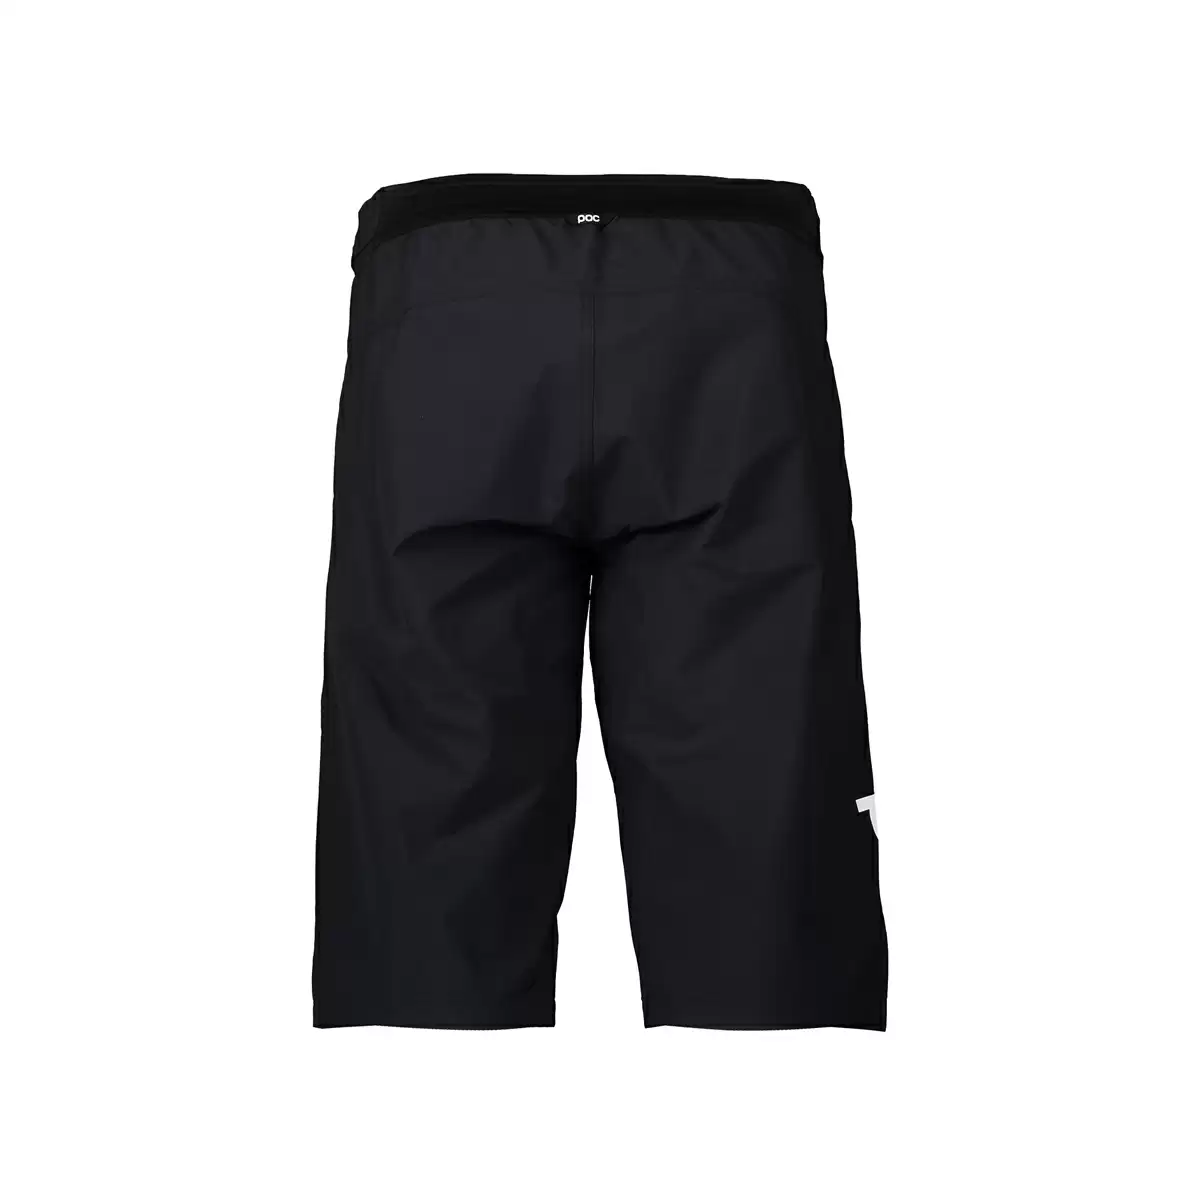 Pantalón corto Essential Enduro negro talla XS #1